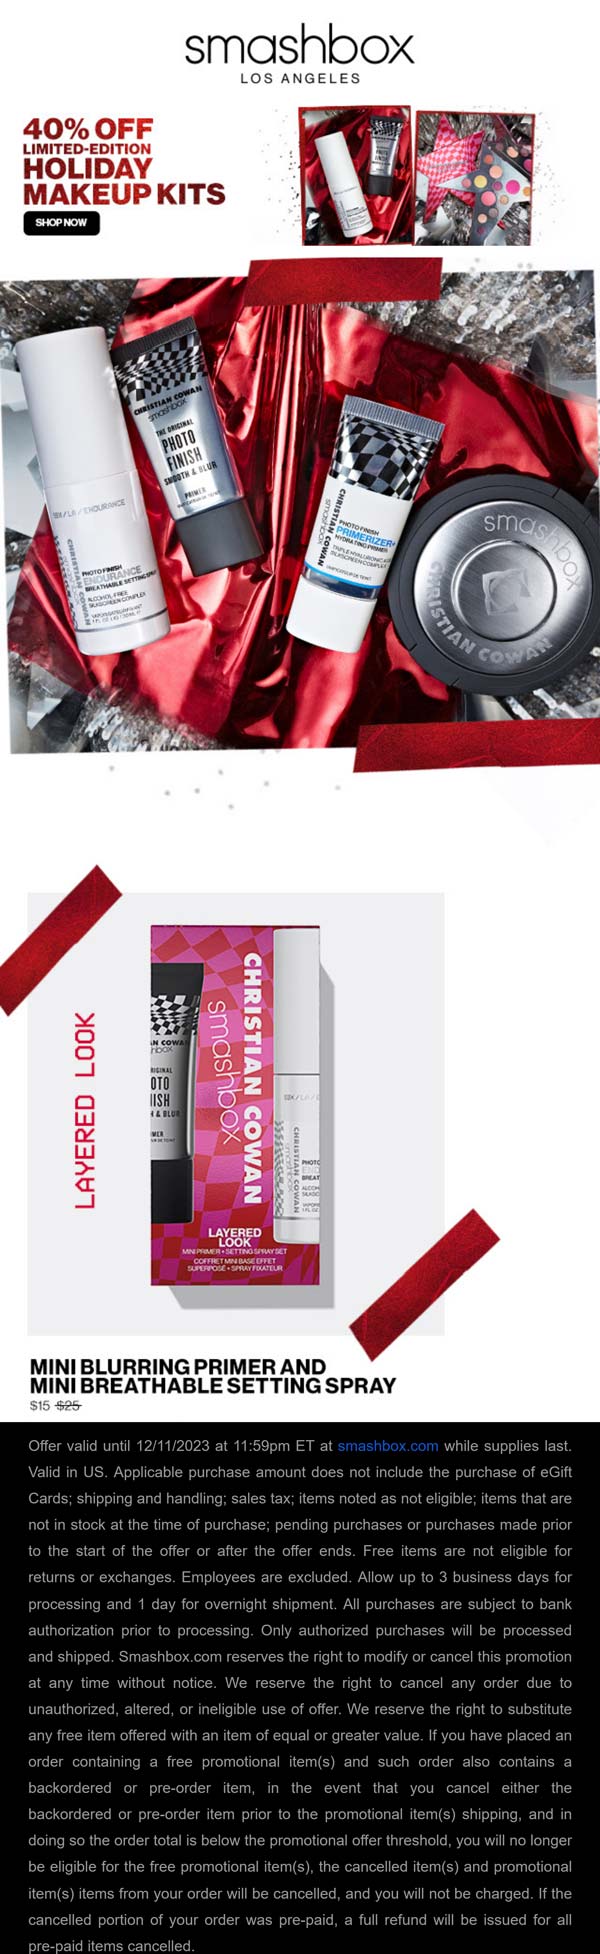 Smashbox stores Coupon  40% off holiday makeup kits at Smashbox cosmetics #smashbox 